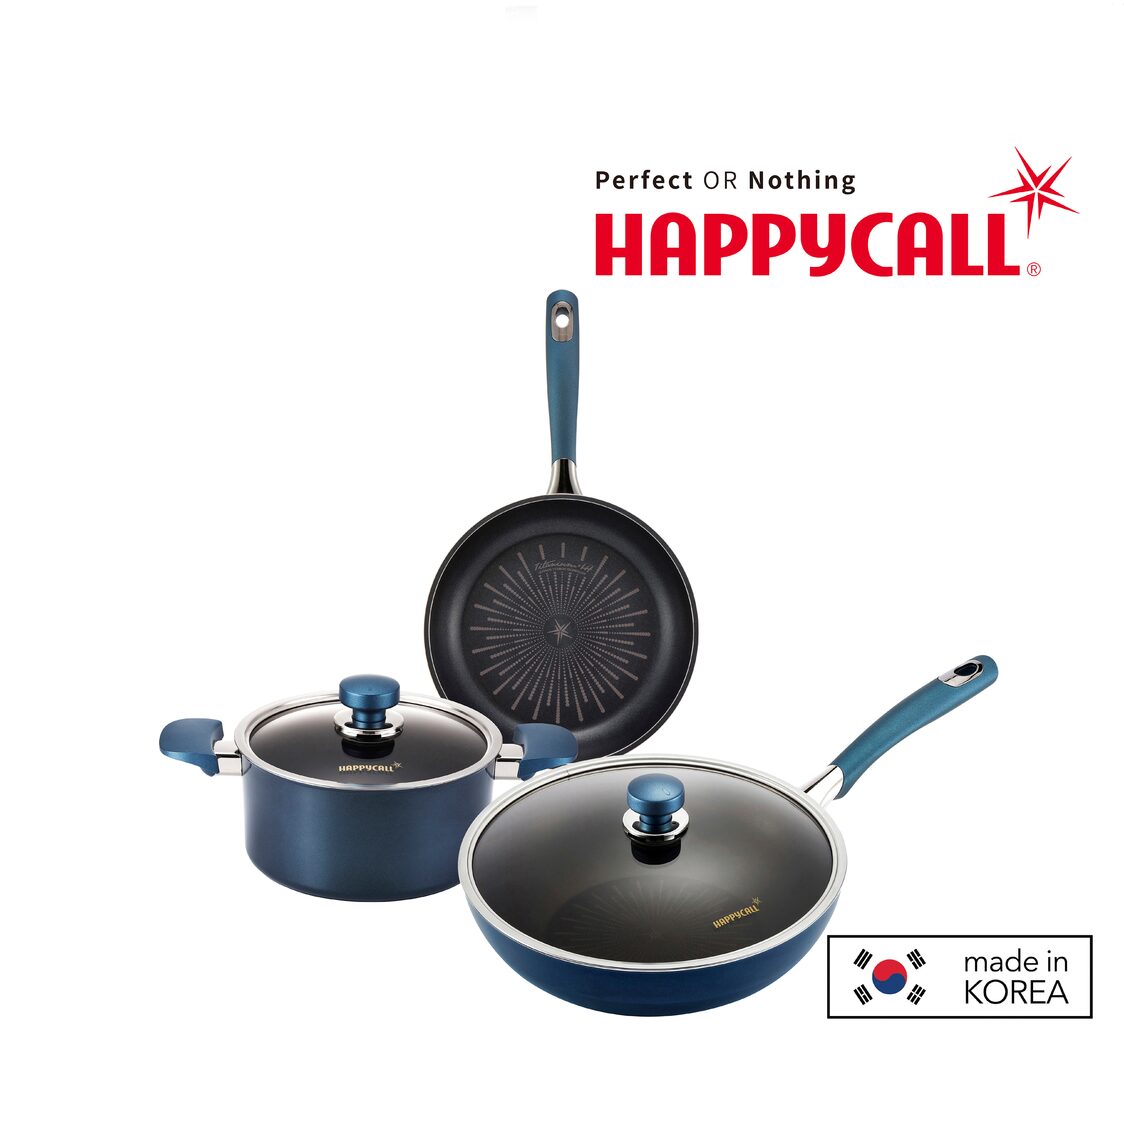 Happycall Pot Holders